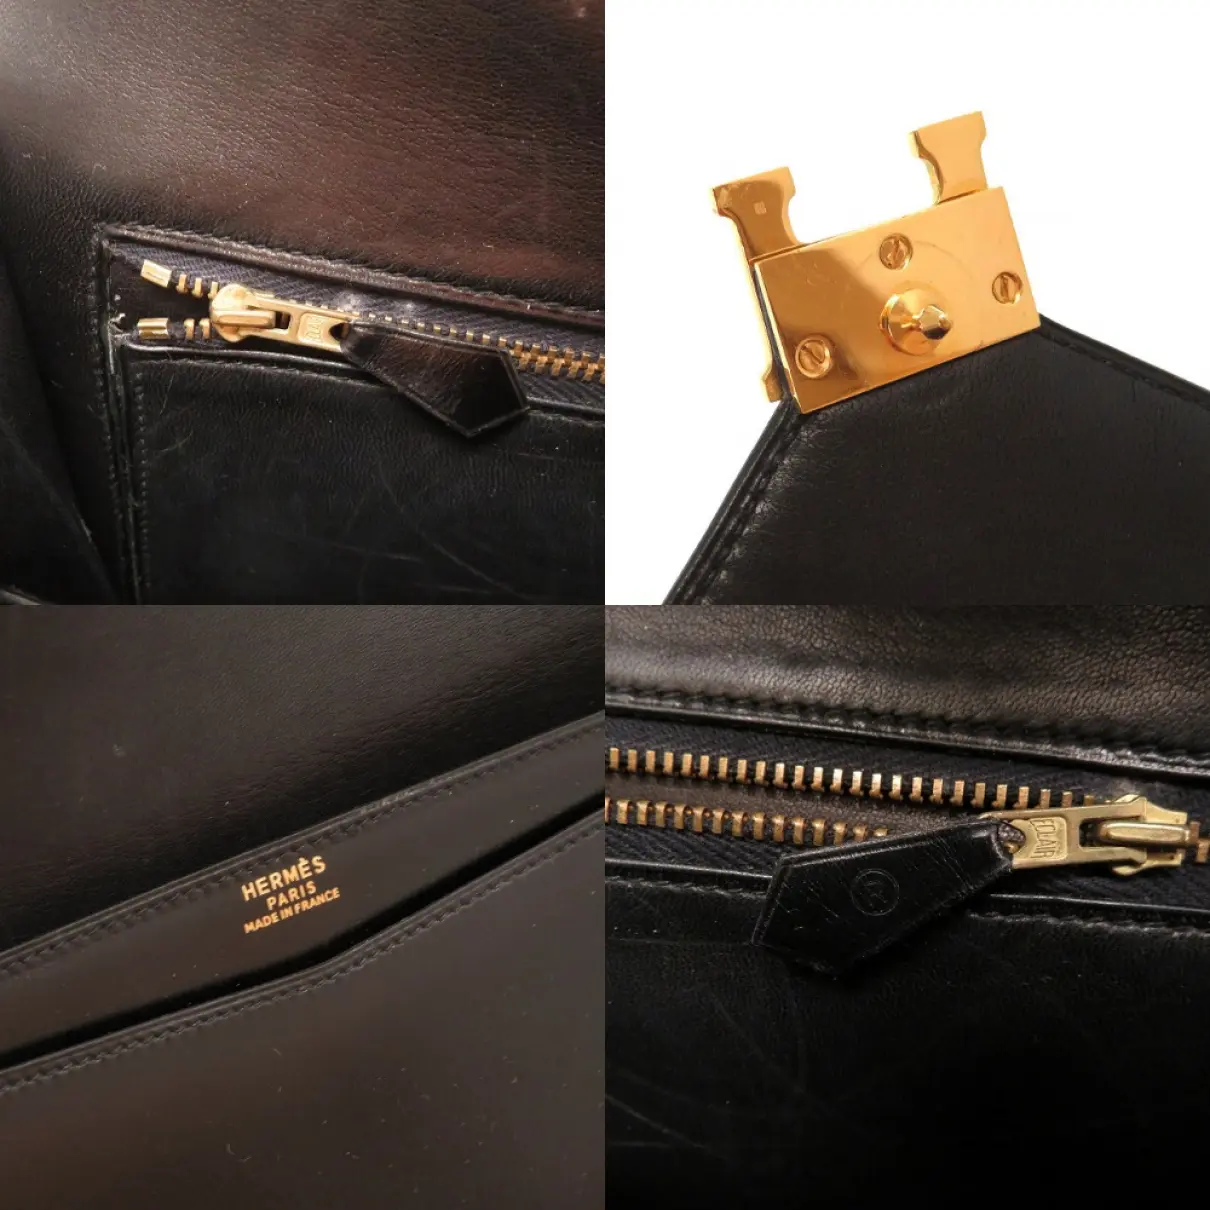 Hermès Lydie leather handbag for sale - Vintage